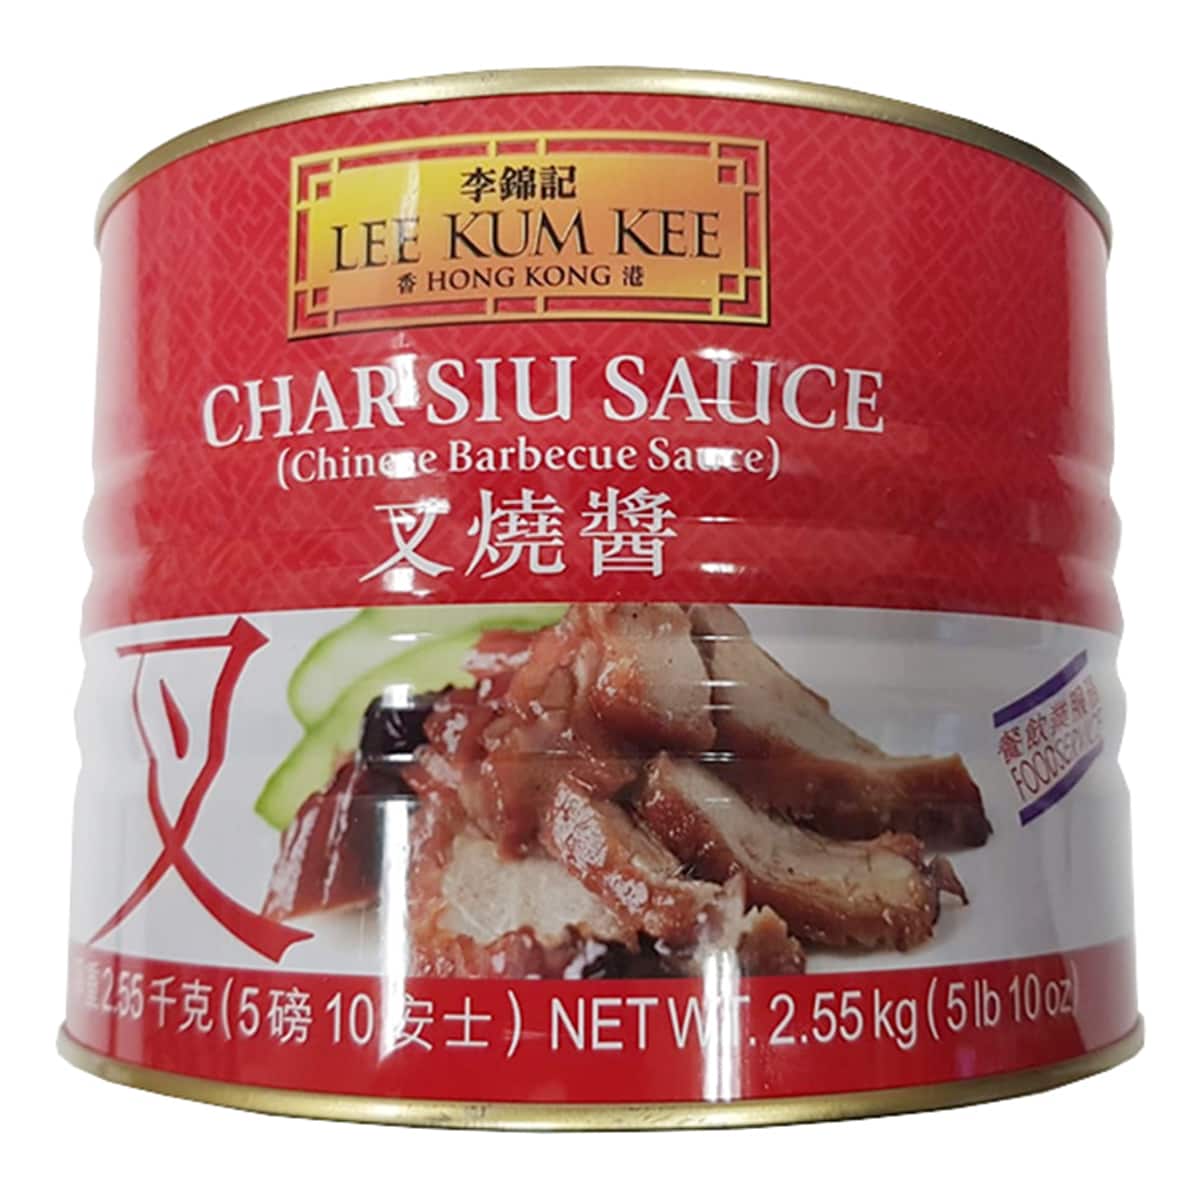 Buy Lee Kum Kee Char Siu Sauce (Chinese Barbecue Sauce) - 2.55 kg